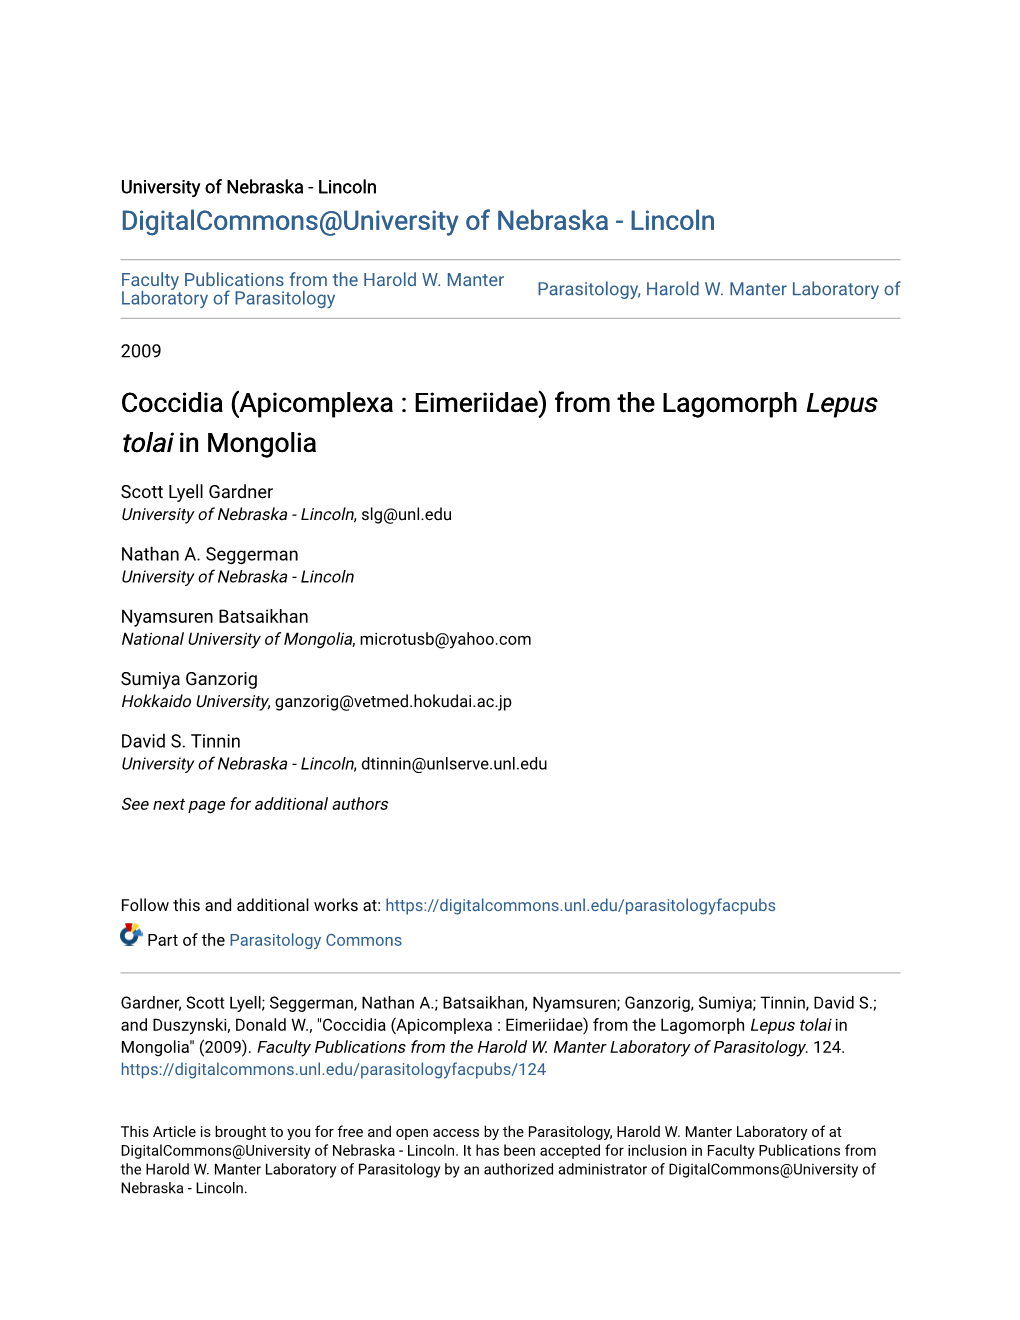 Coccidia (Apicomplexa : Eimeriidae) from the Lagomorph Lepus Tolai in Mongolia